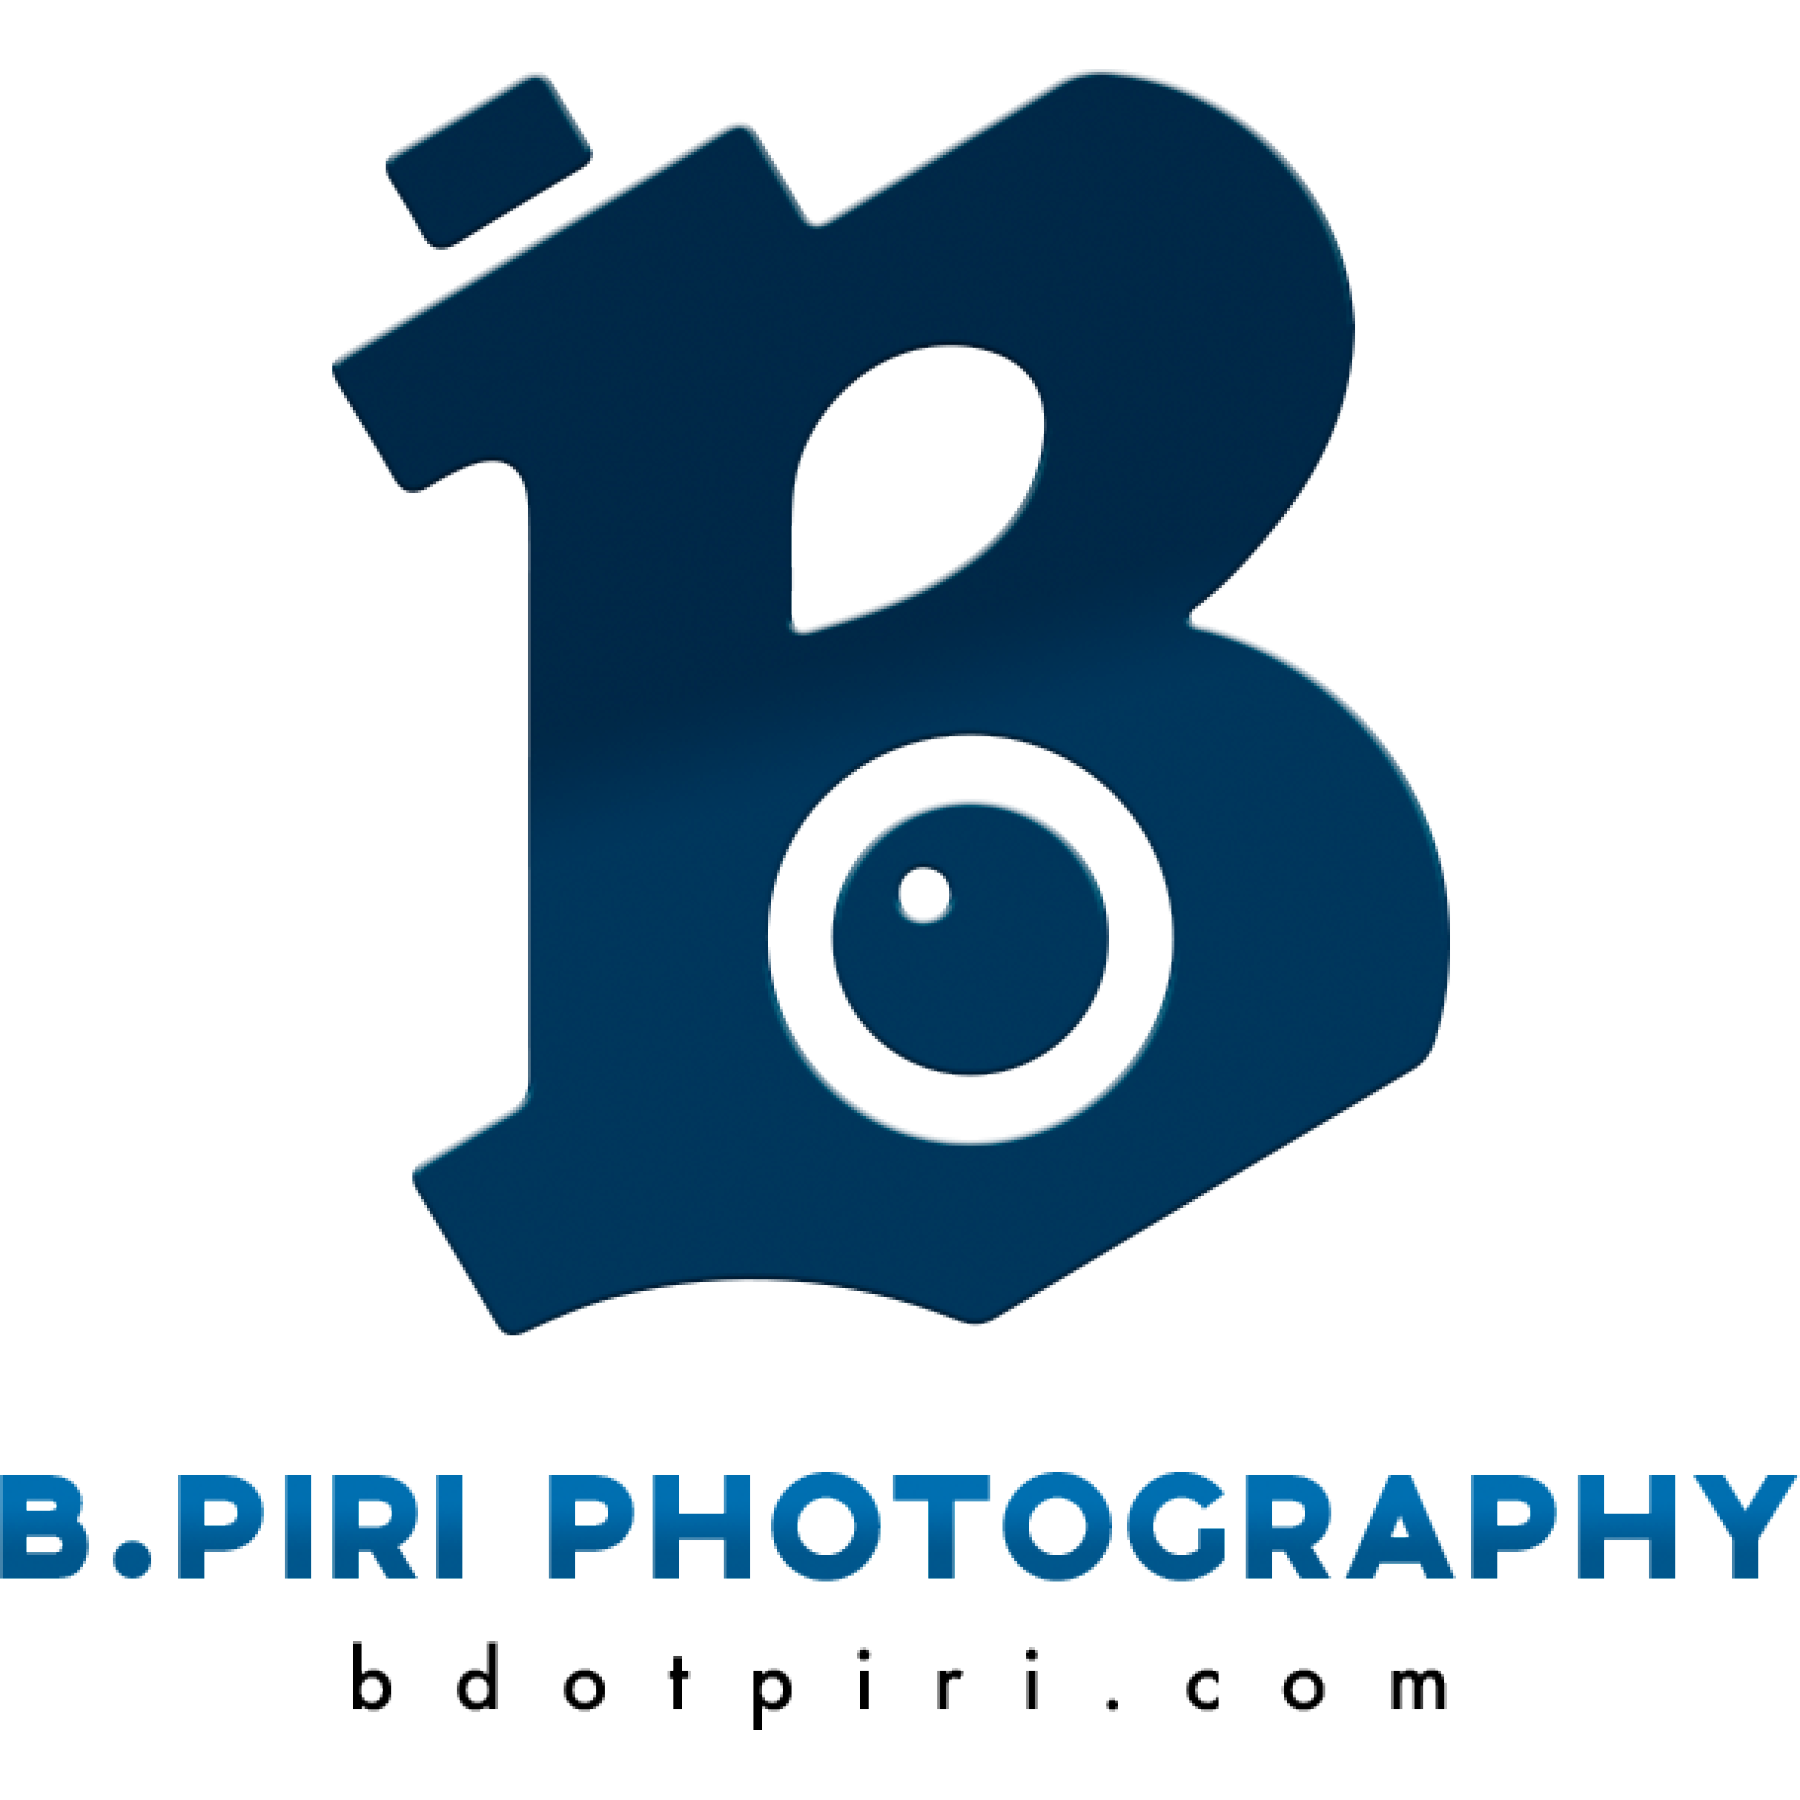 B. Piri Photography